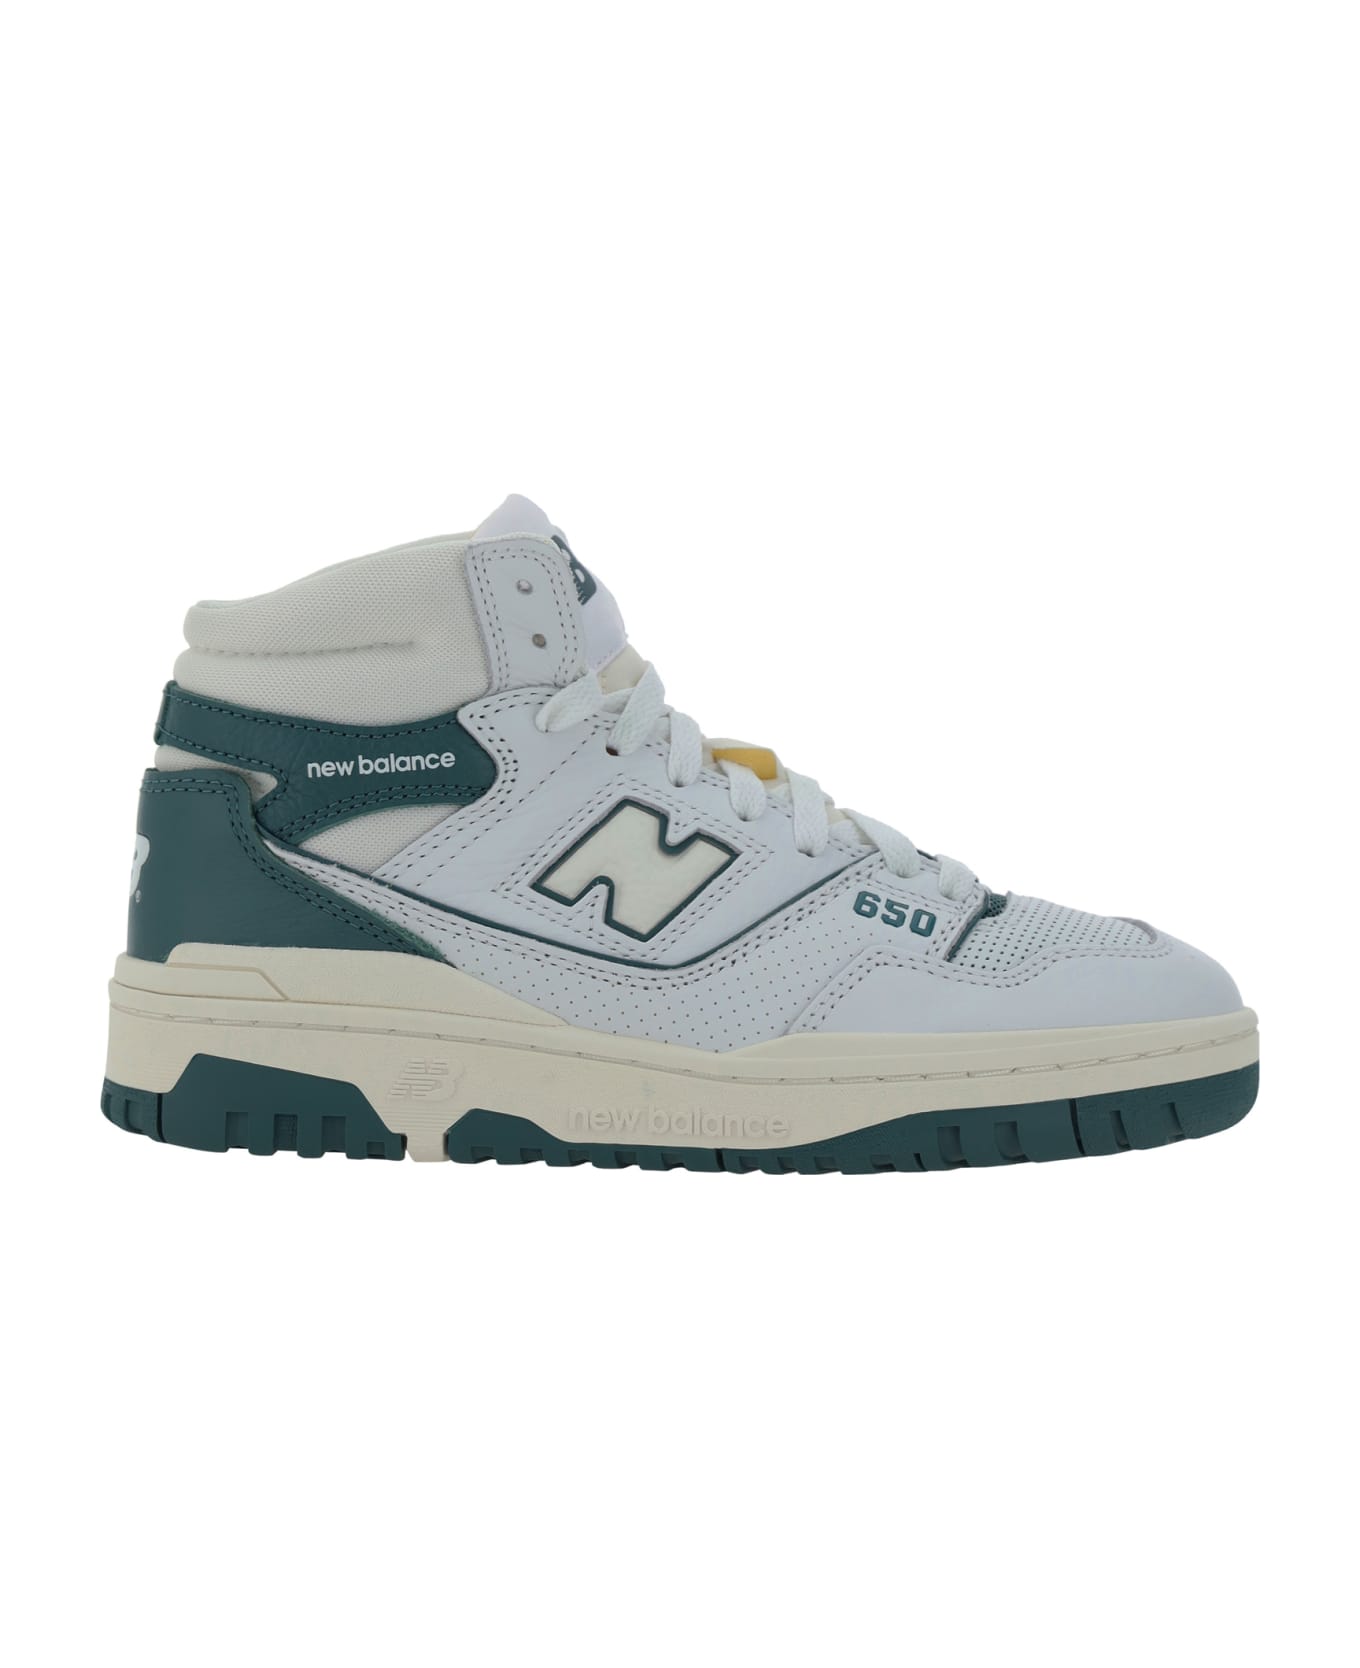 New Balance 550 High Sneakers - White/petrol